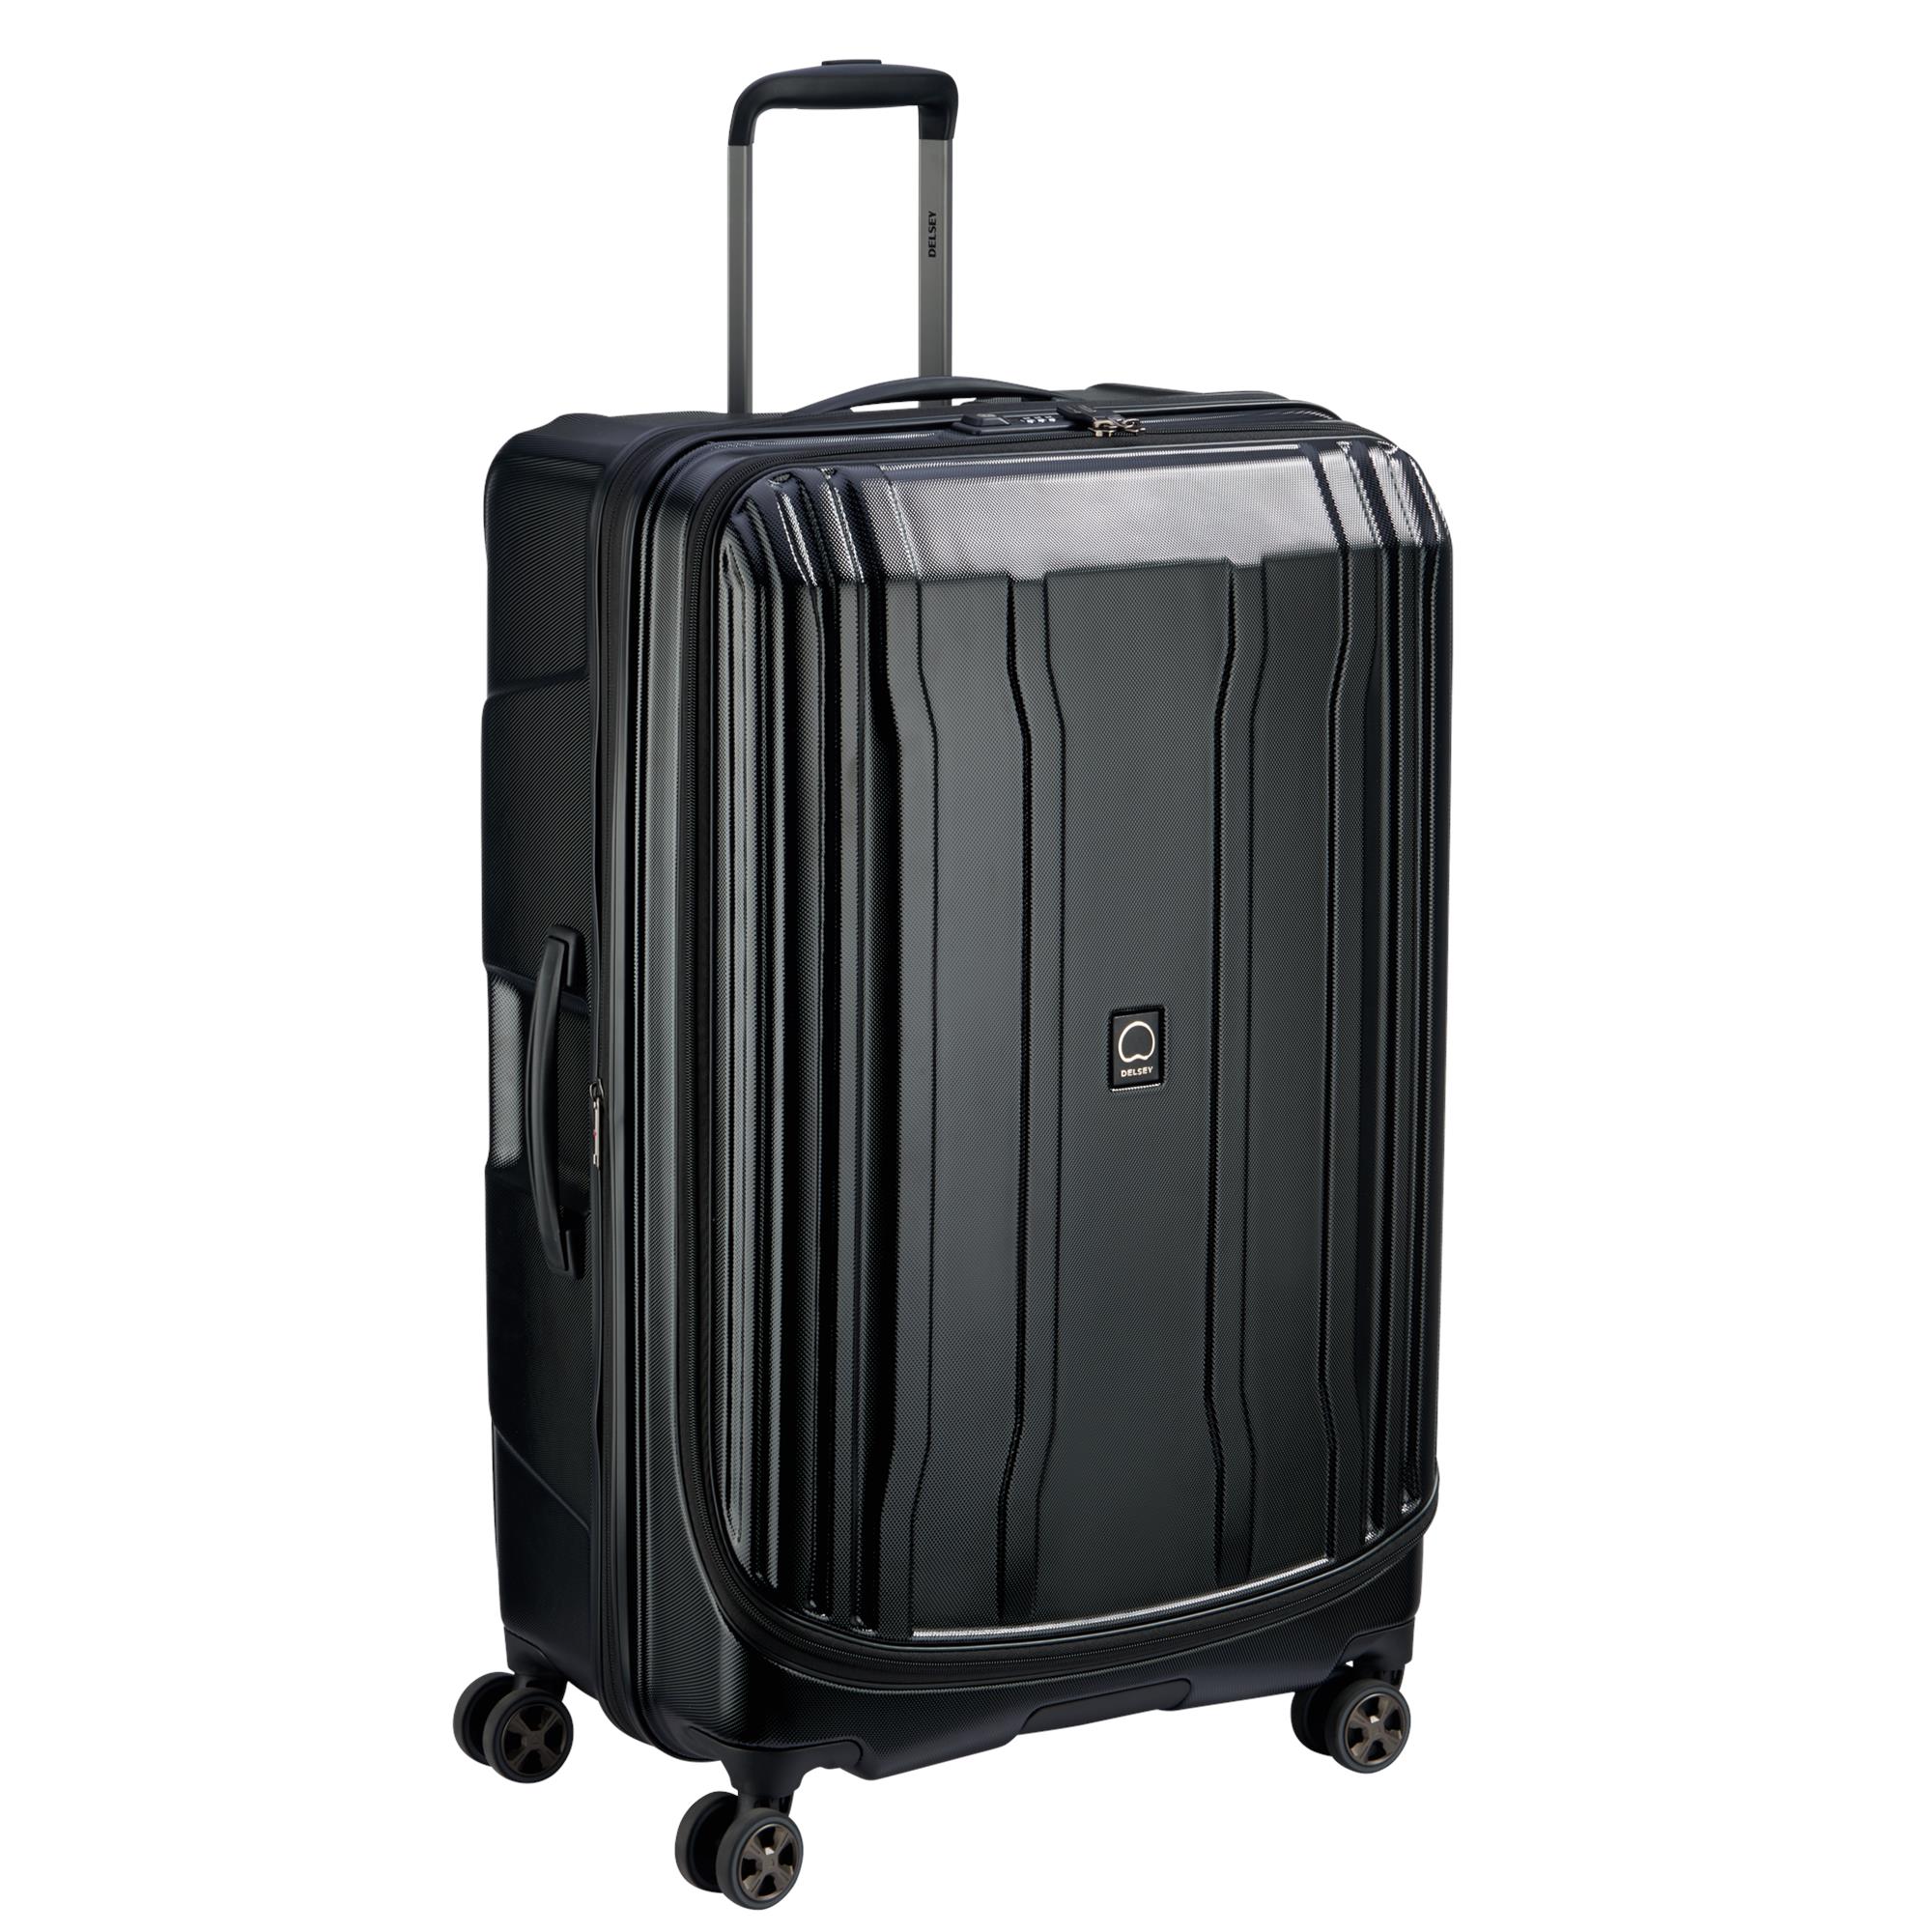 DELSEY Paris Cruise Lite Hardside 2.0 29 Inch Rolling Luggage Suitcase(Open Box) 98376057025 | eBay